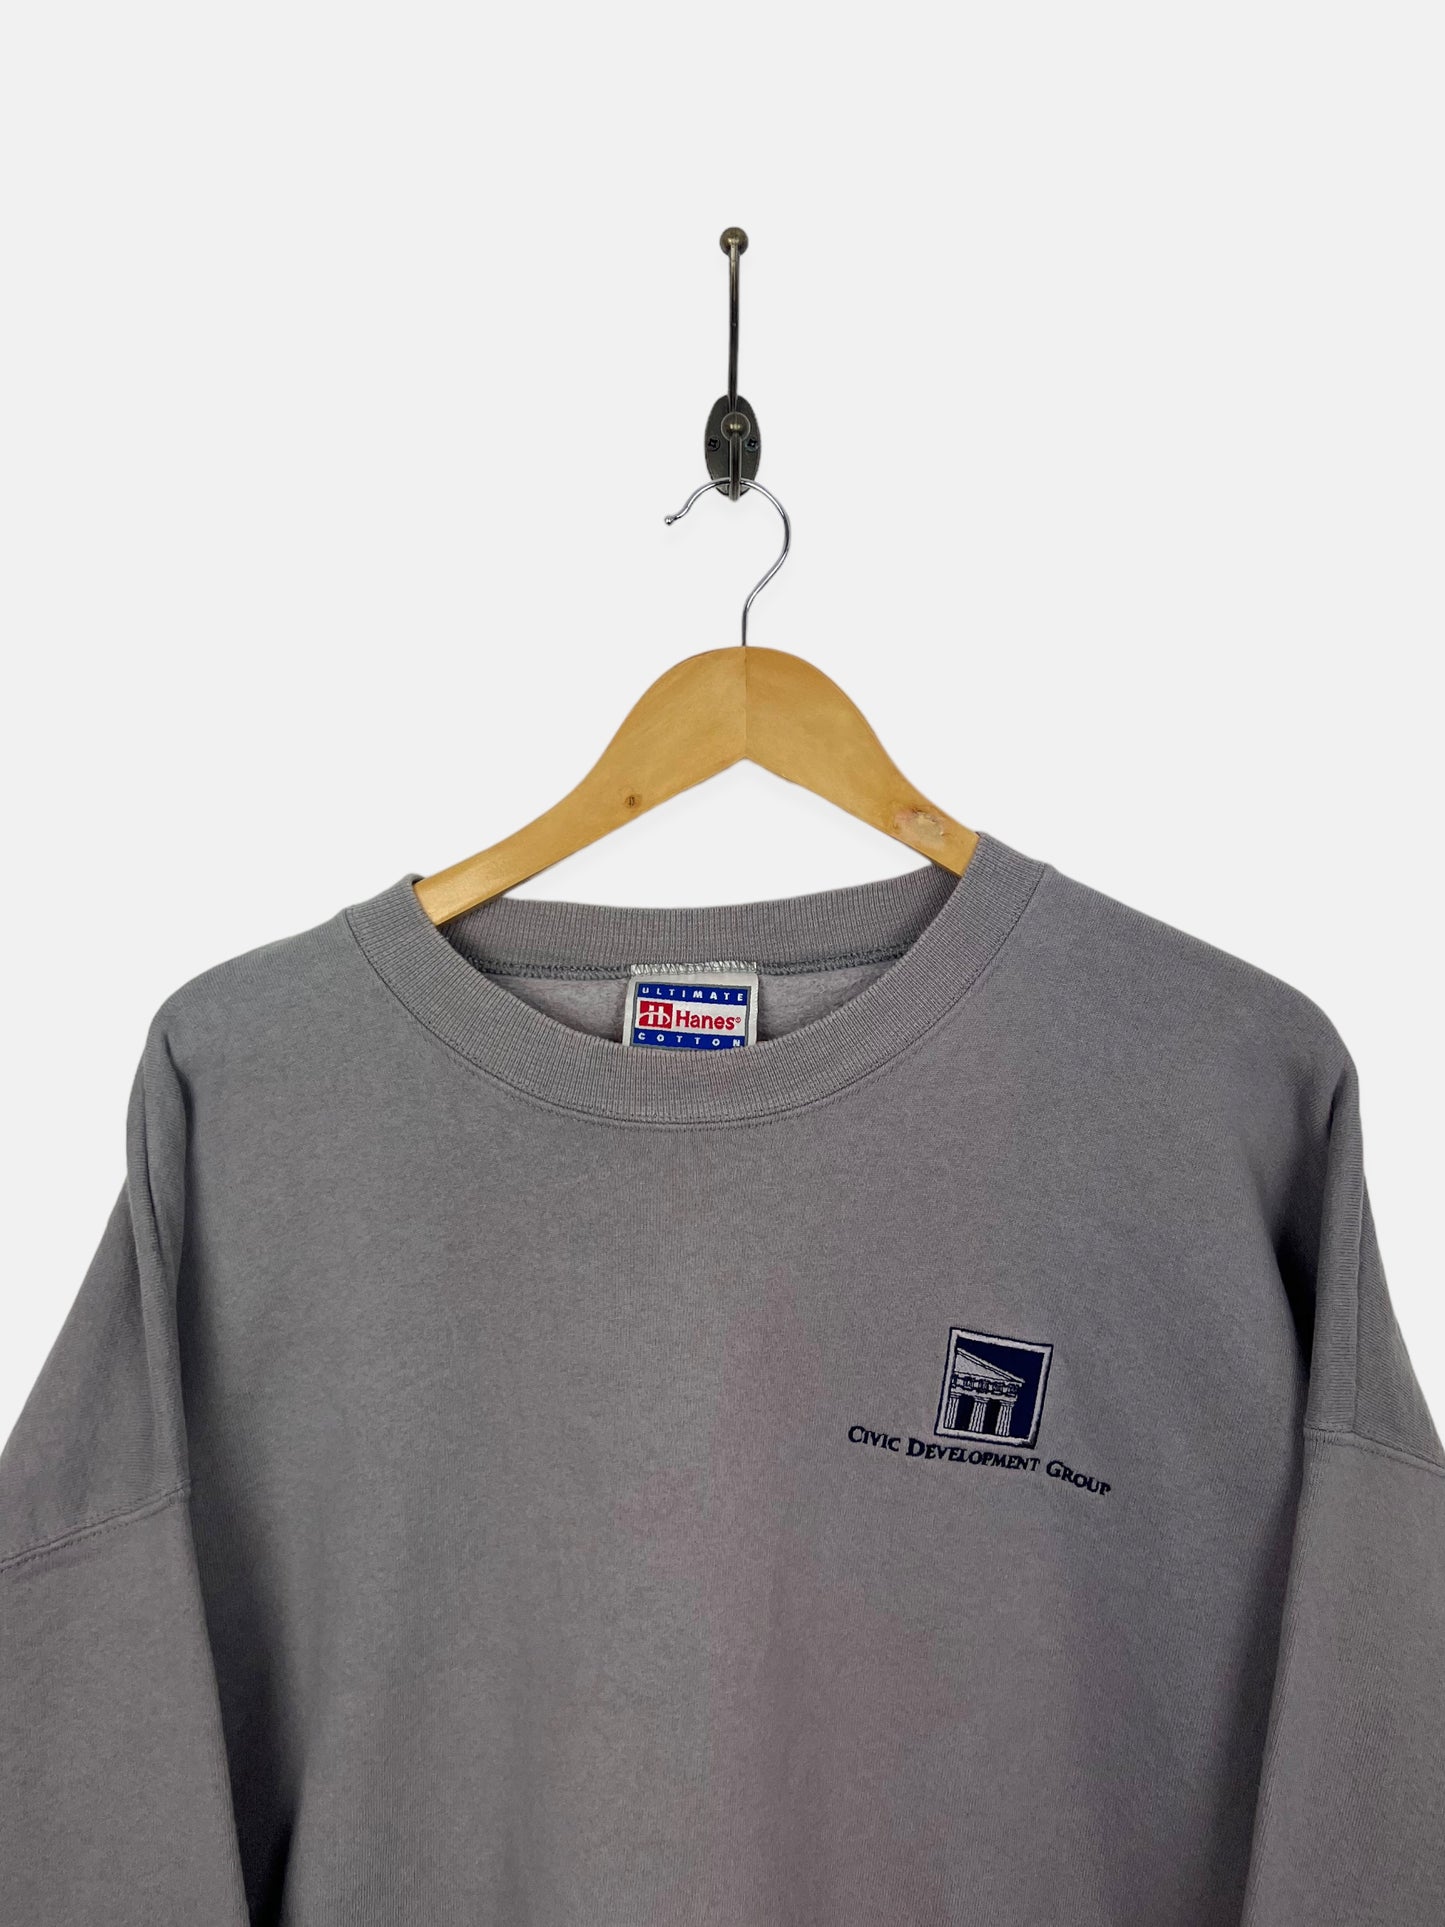 90's Civic Development Group Embroidered Vintage Sweatshirt Size XL-2XL